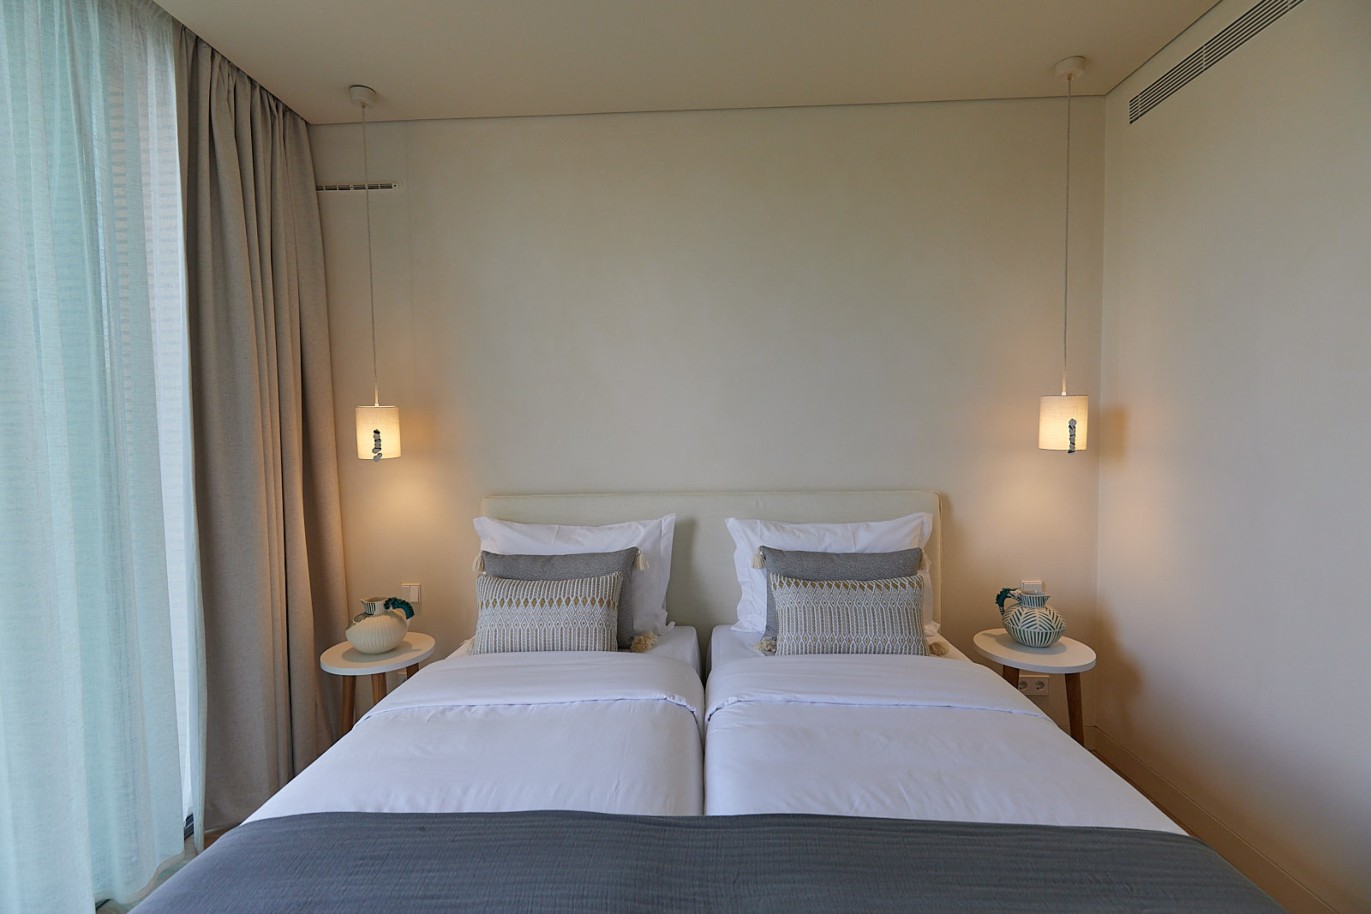 2 bedroom apartment in resort, for sale in Porches, Algarve_229096